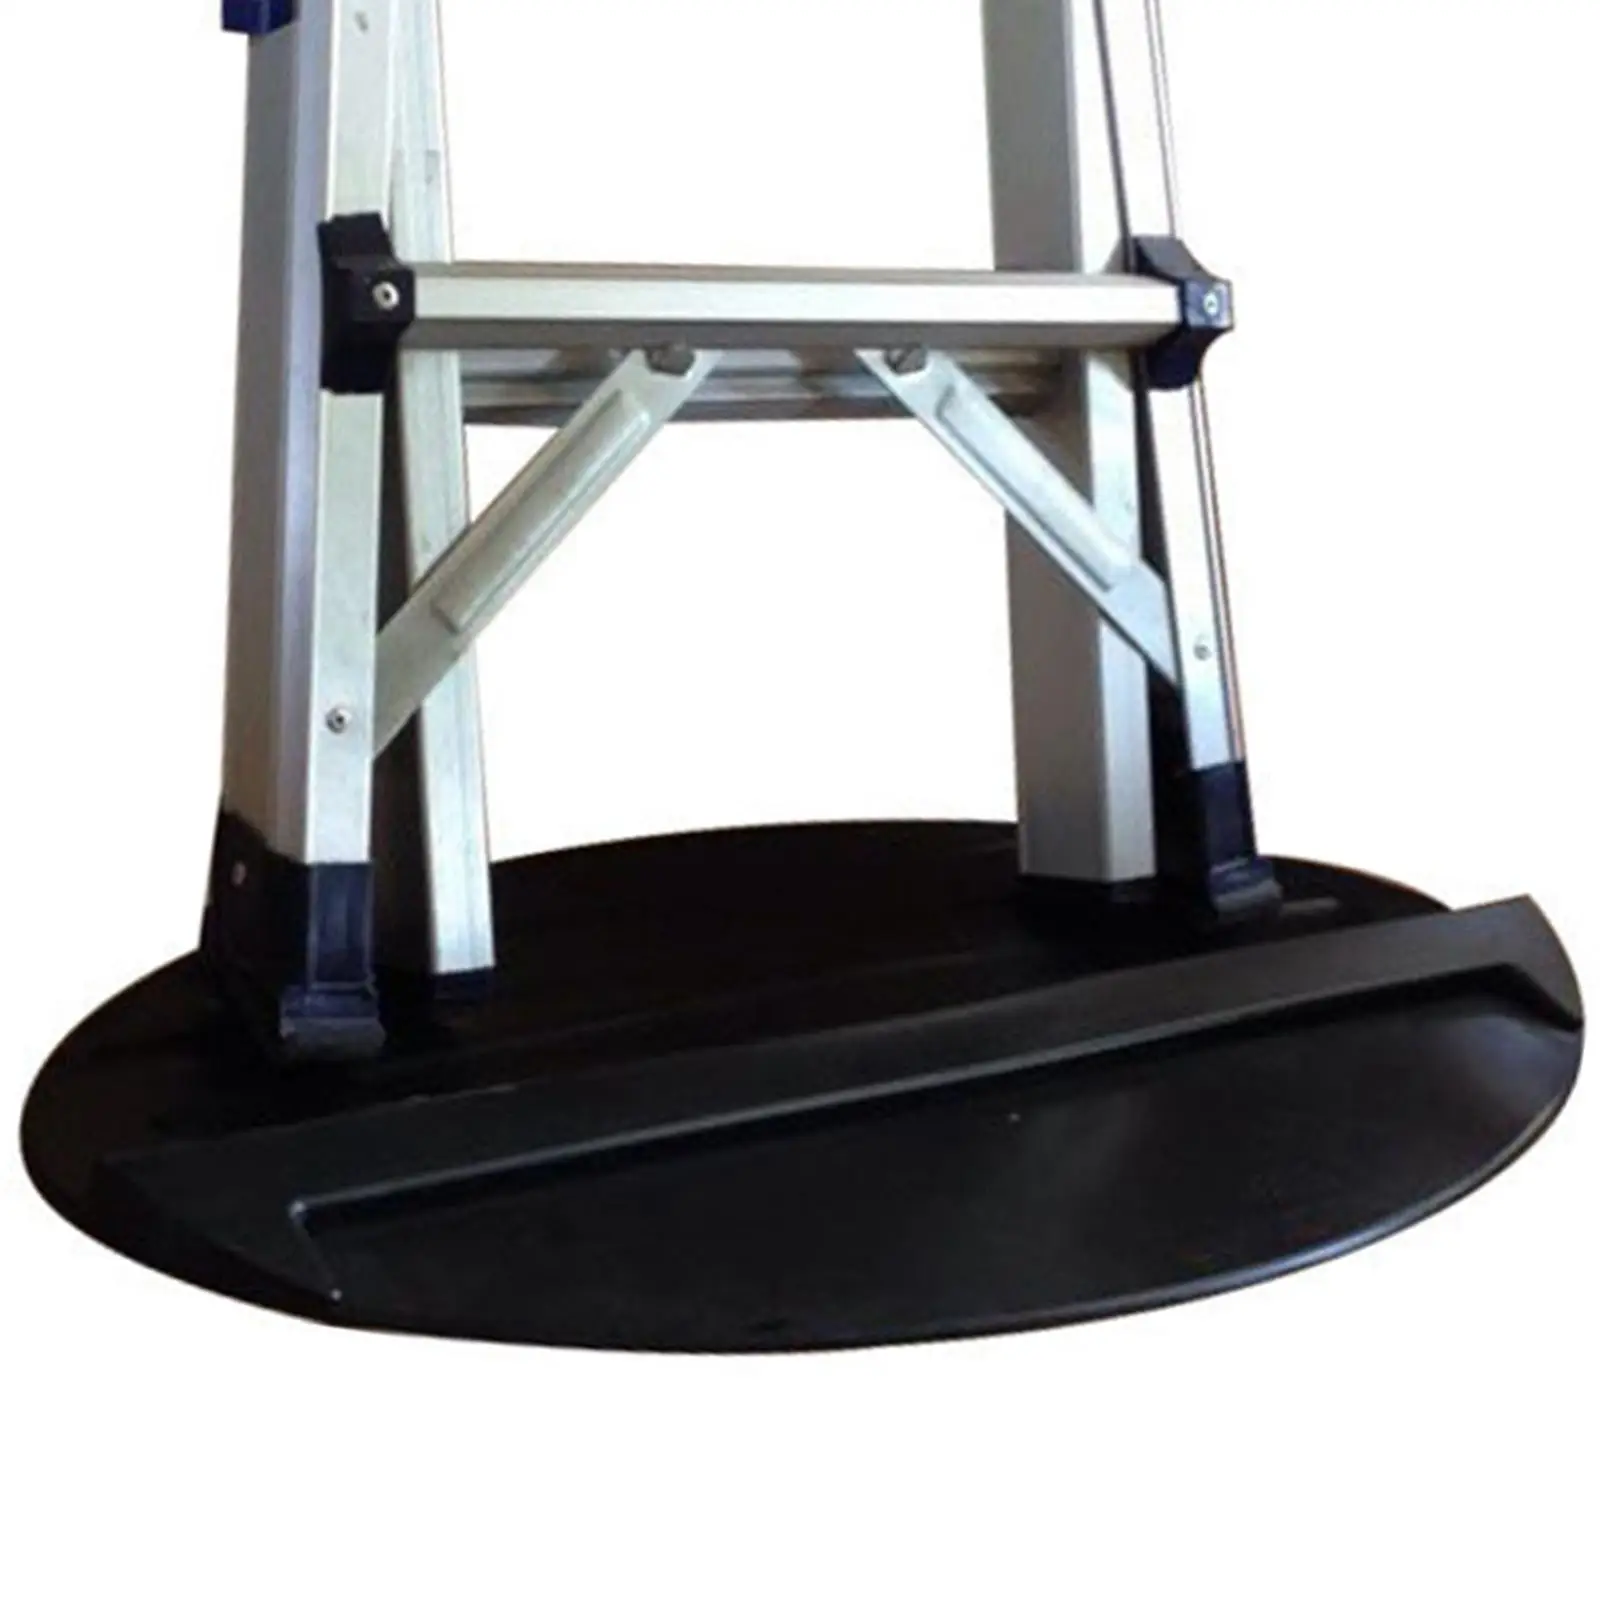 Extension Ladder Mat Non Slip Rubber Lightweight Black Color Floor Protected Soft Part